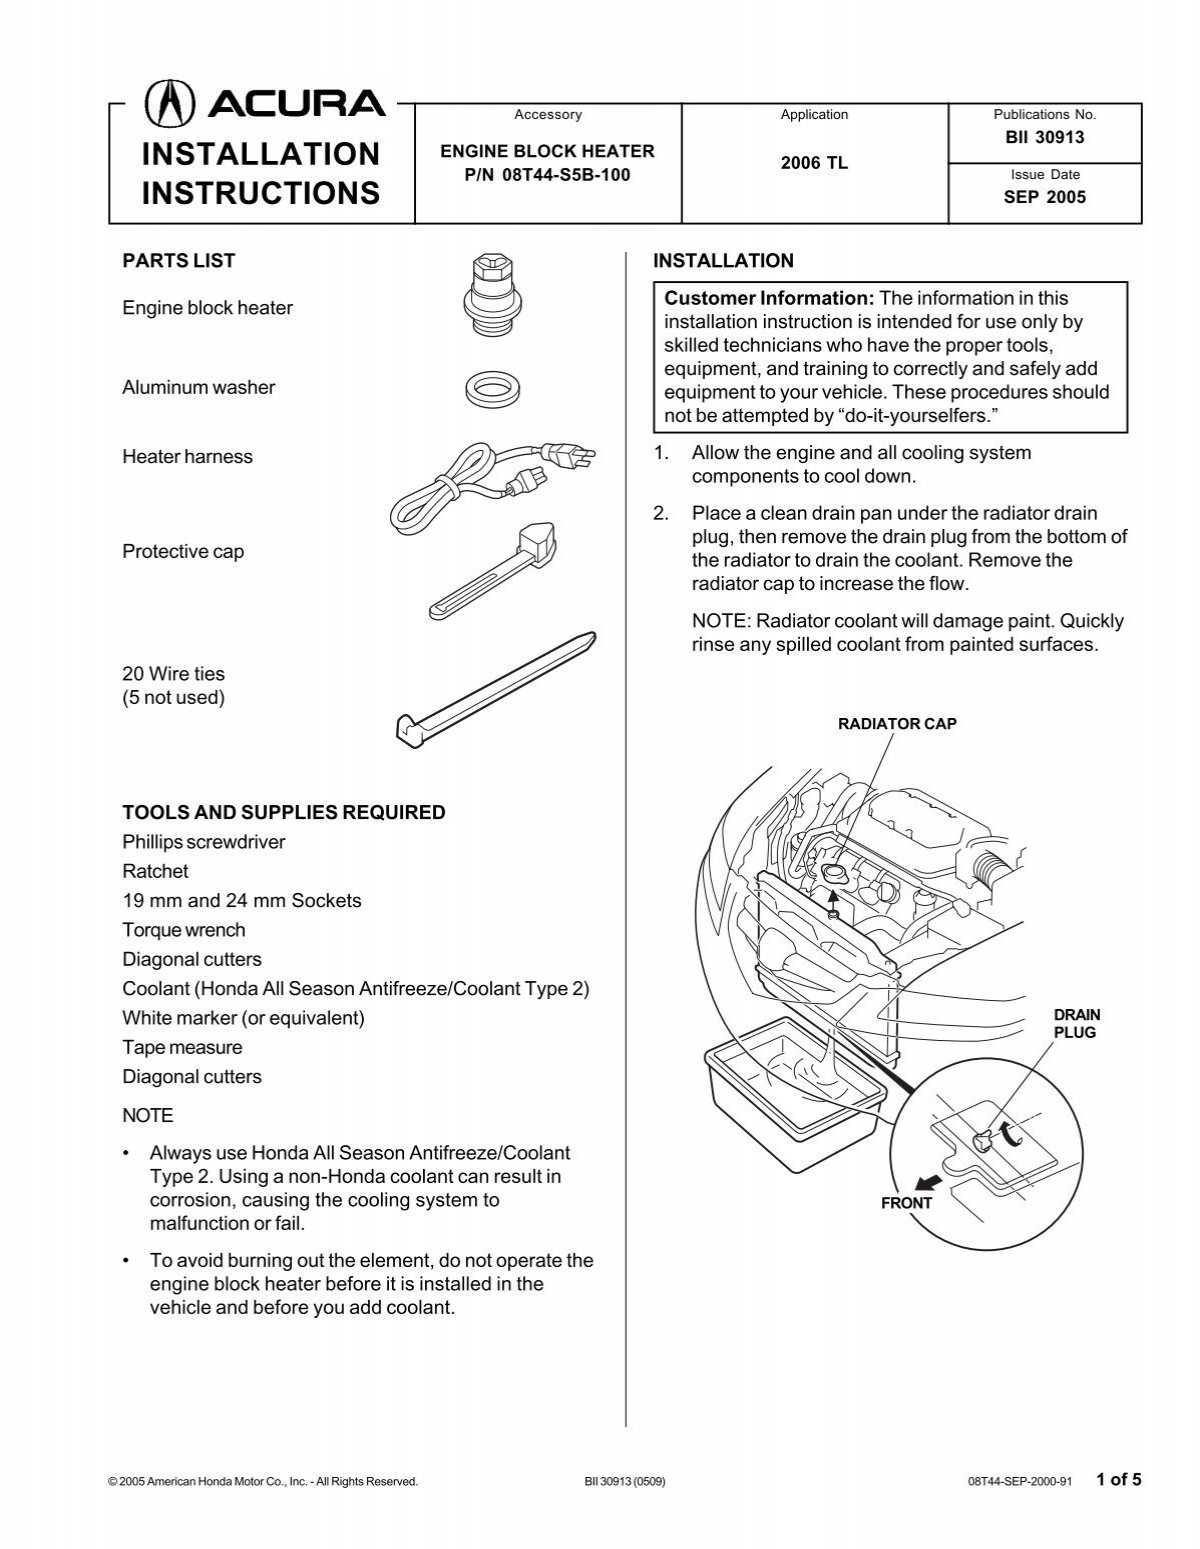 Engine Block Heater Installation Instructions - Bernardi Acura Parts